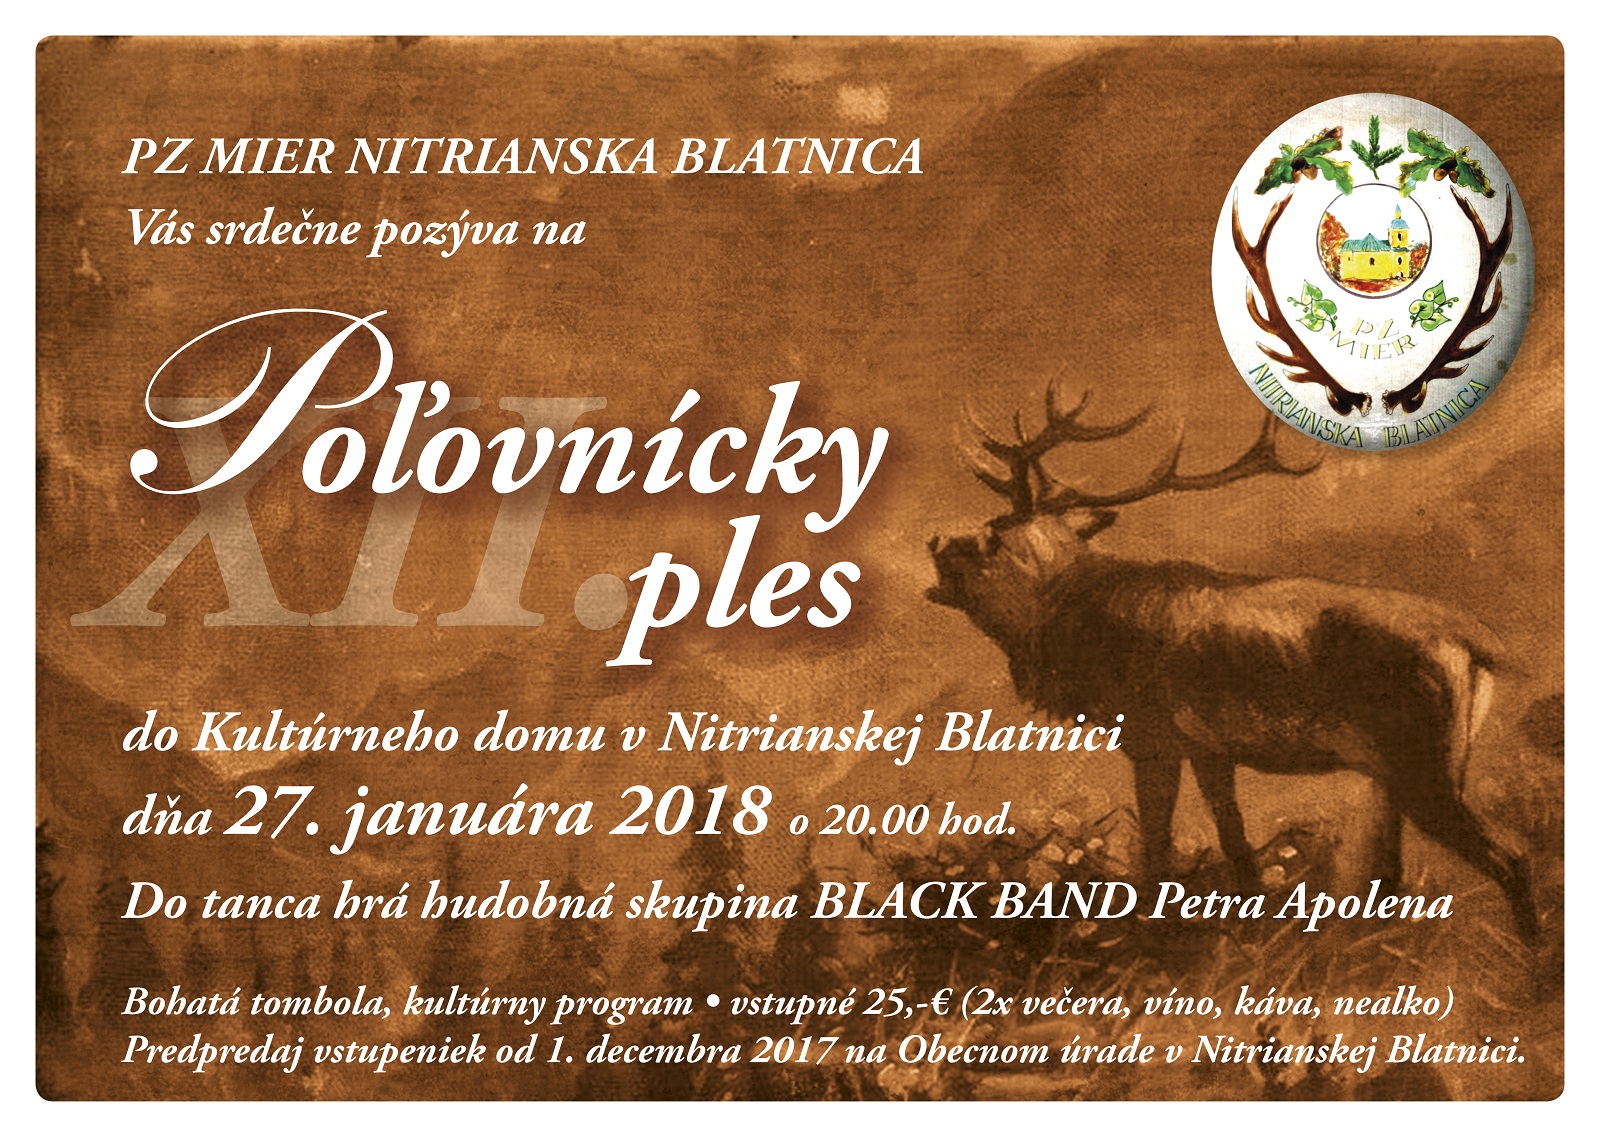 XII. Poovncky ples 2018 Nitrianska Blatnica